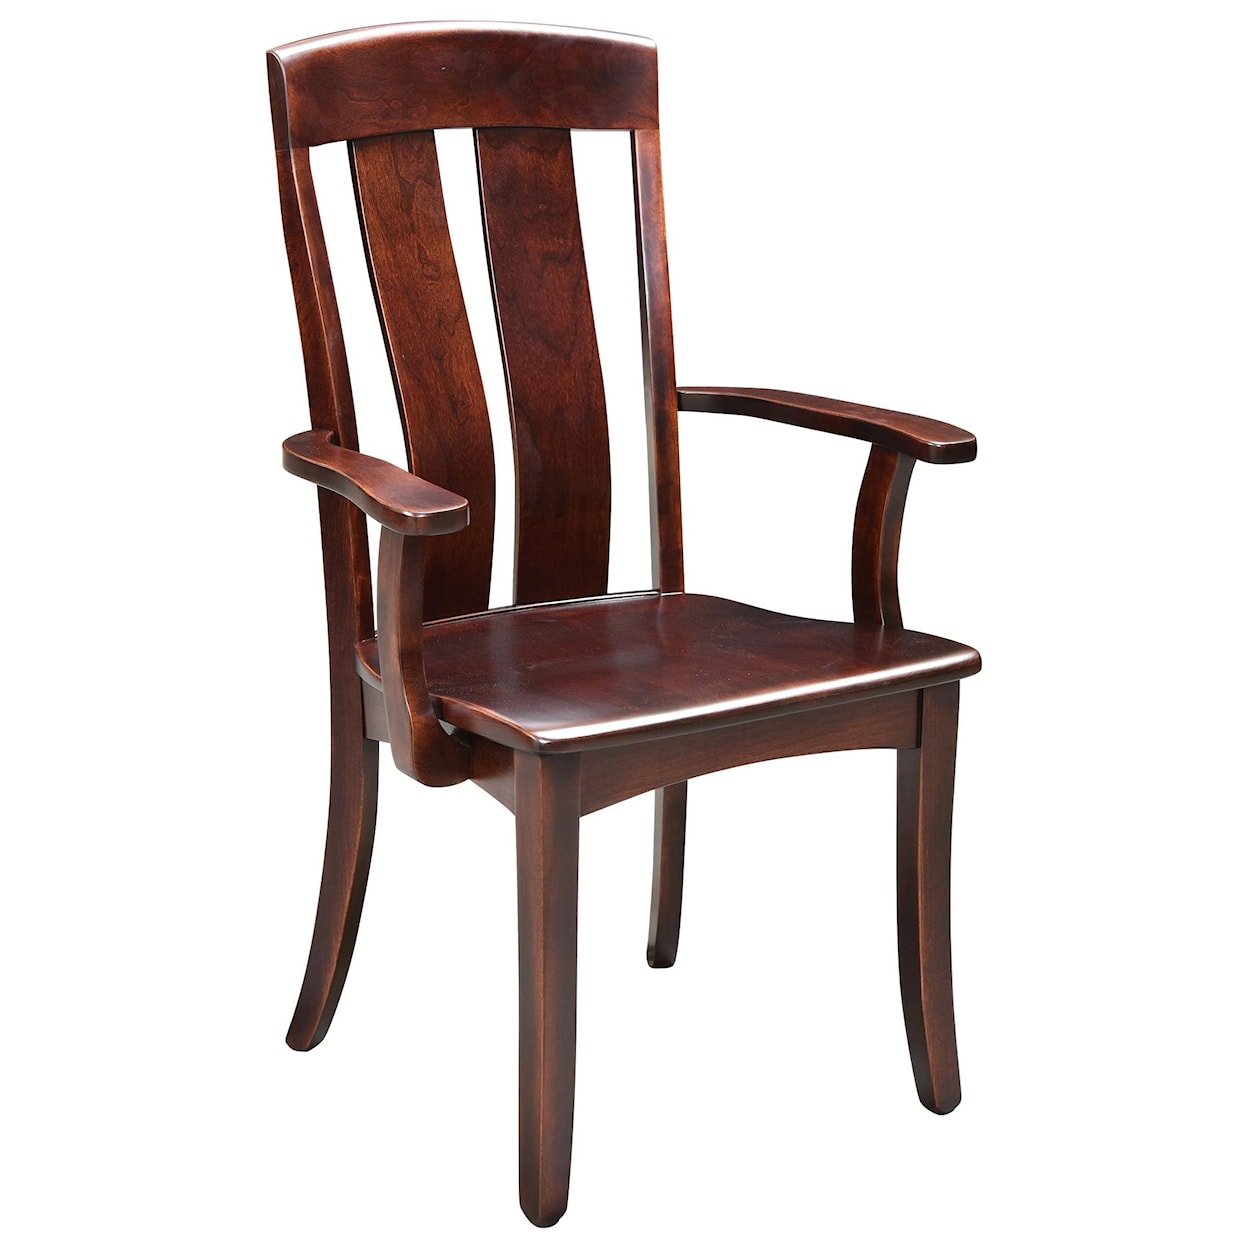 Wengerd Wood Products Cheyenne Arm Chair